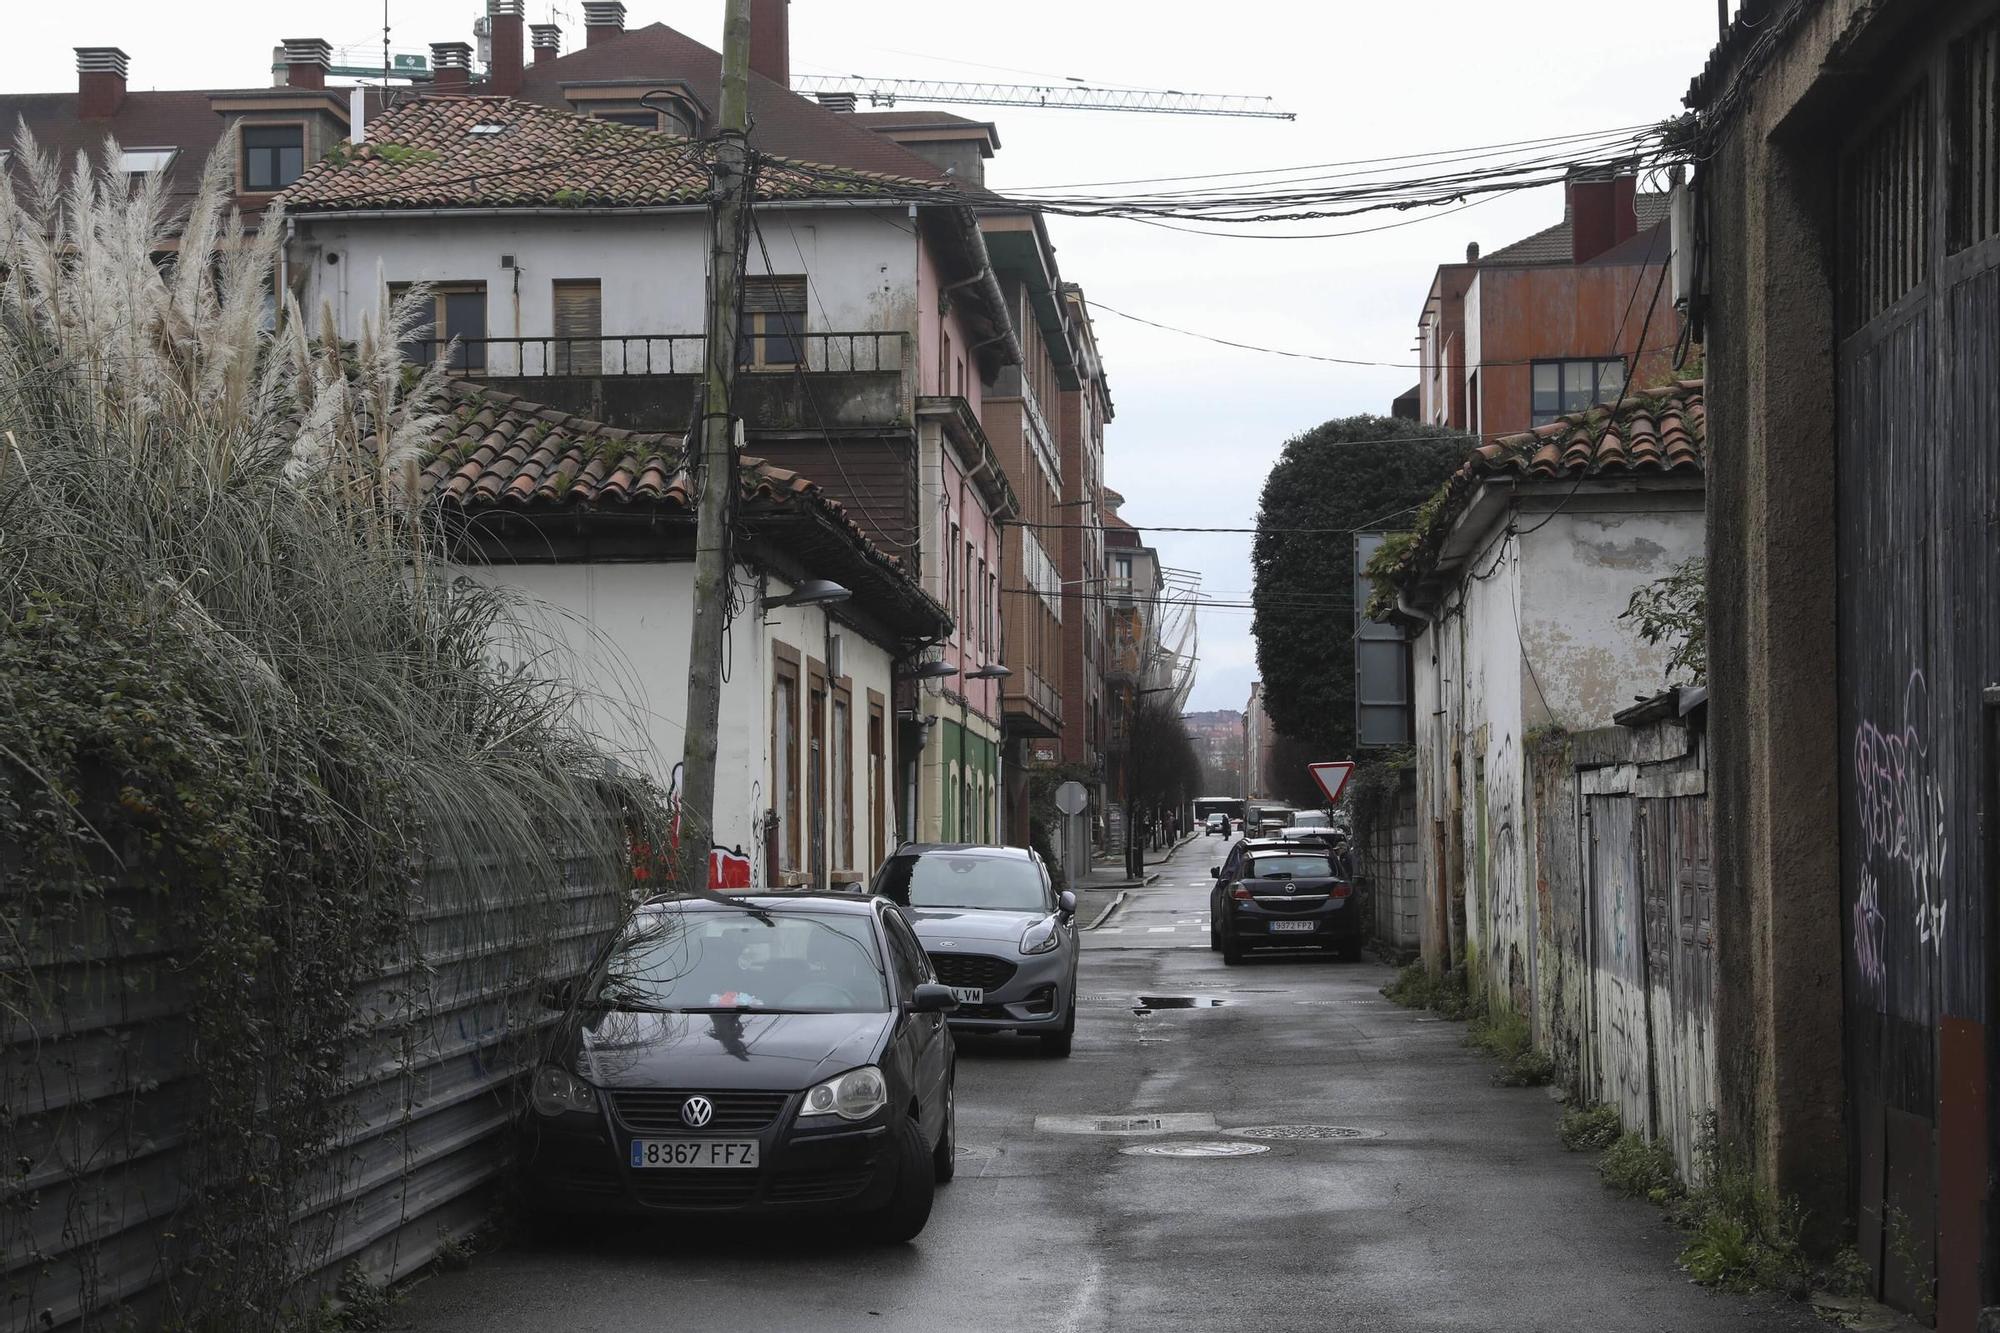 Natahoyo, el barrio más centrico de Gijón